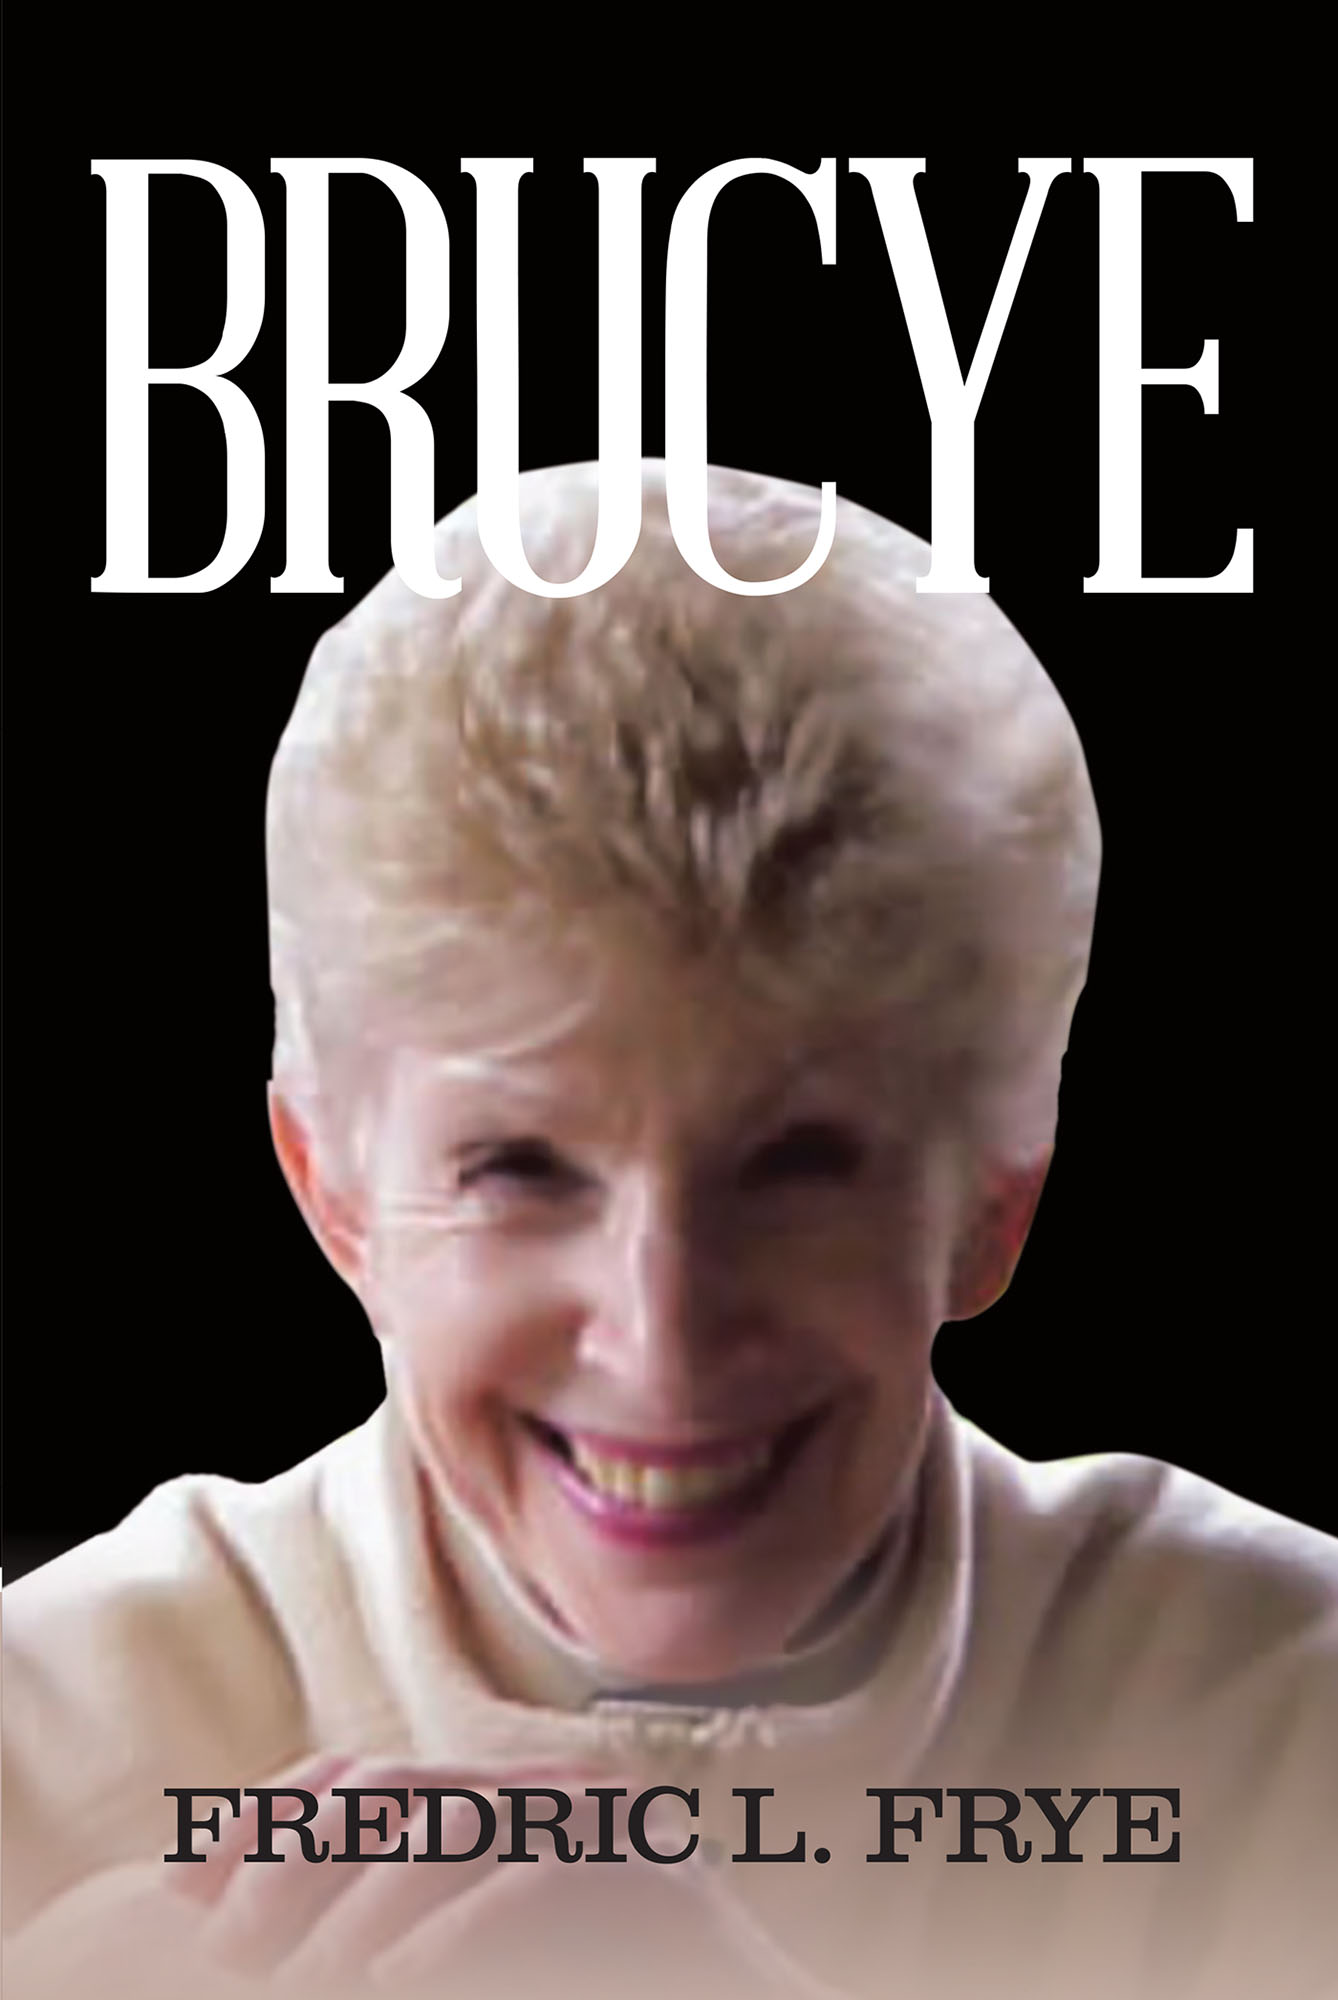 Brucye Cover Image